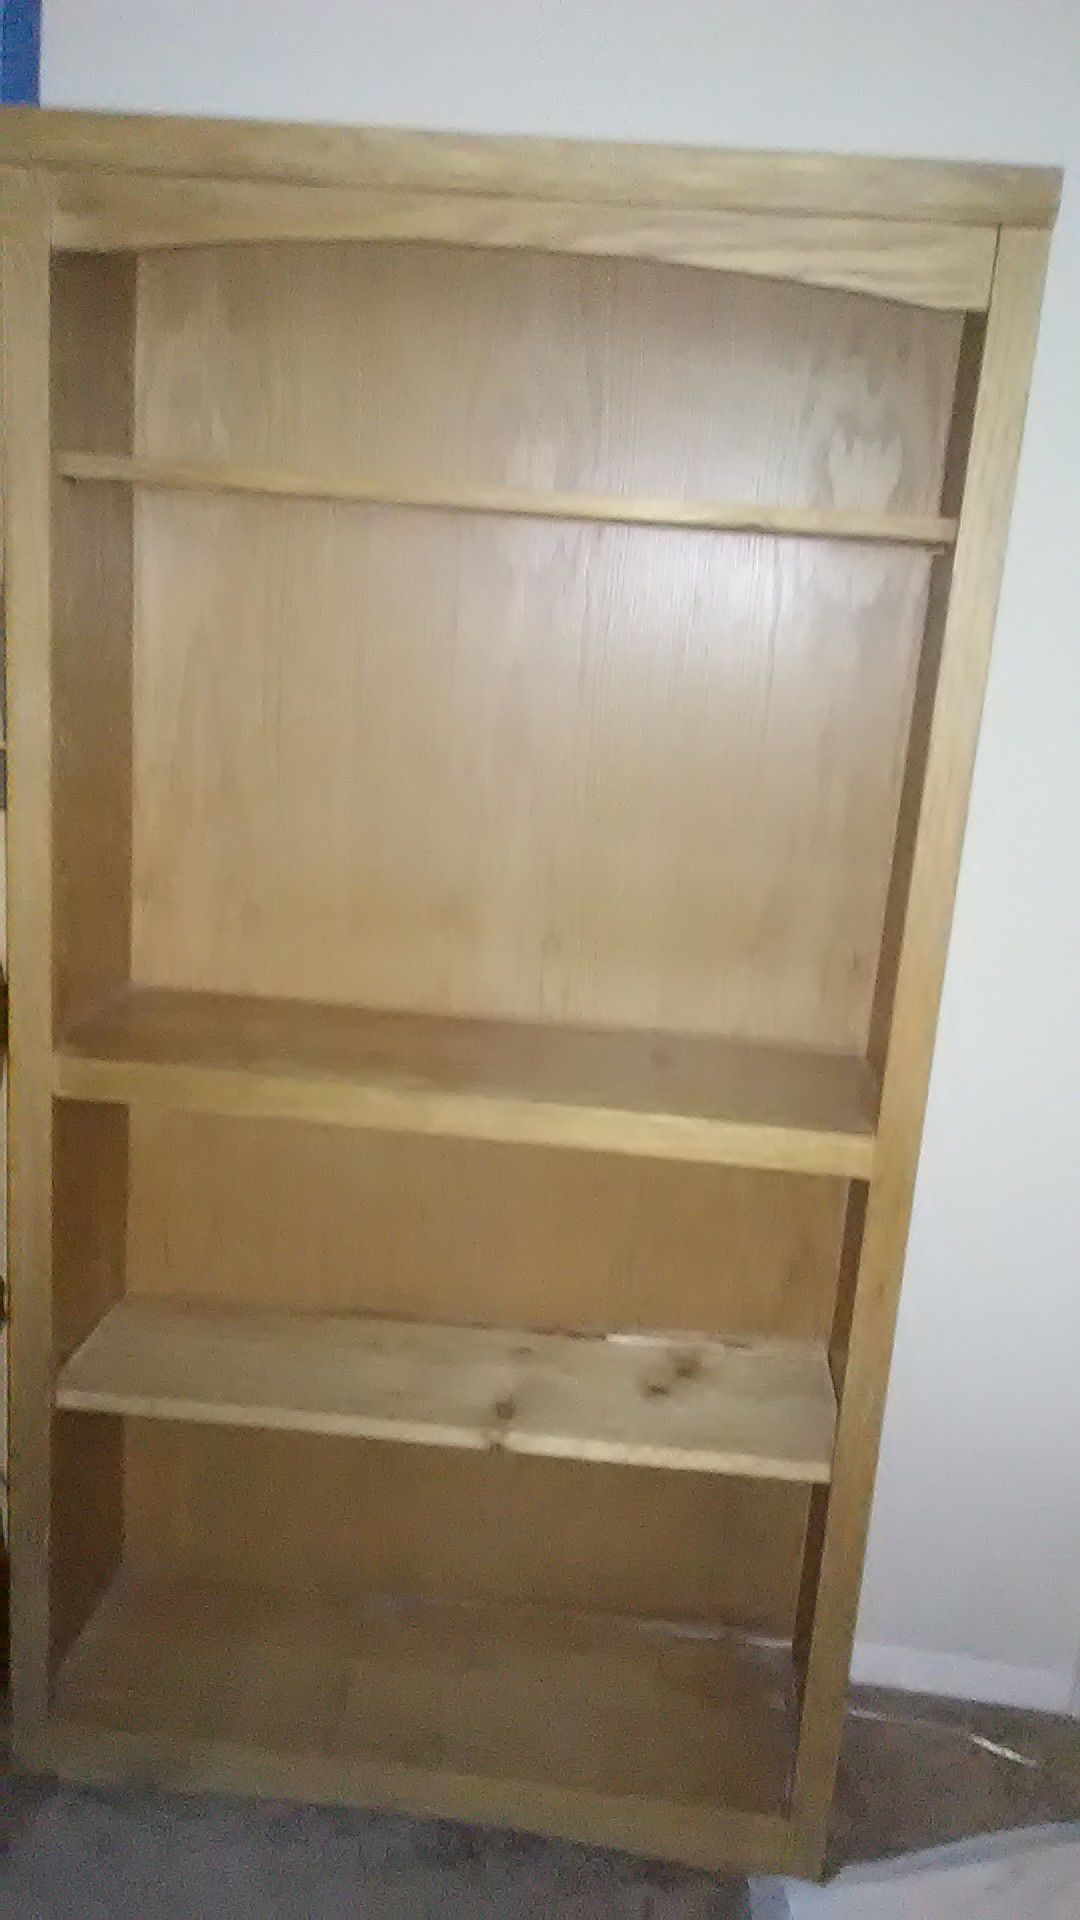 4 shelf wooden bookcase